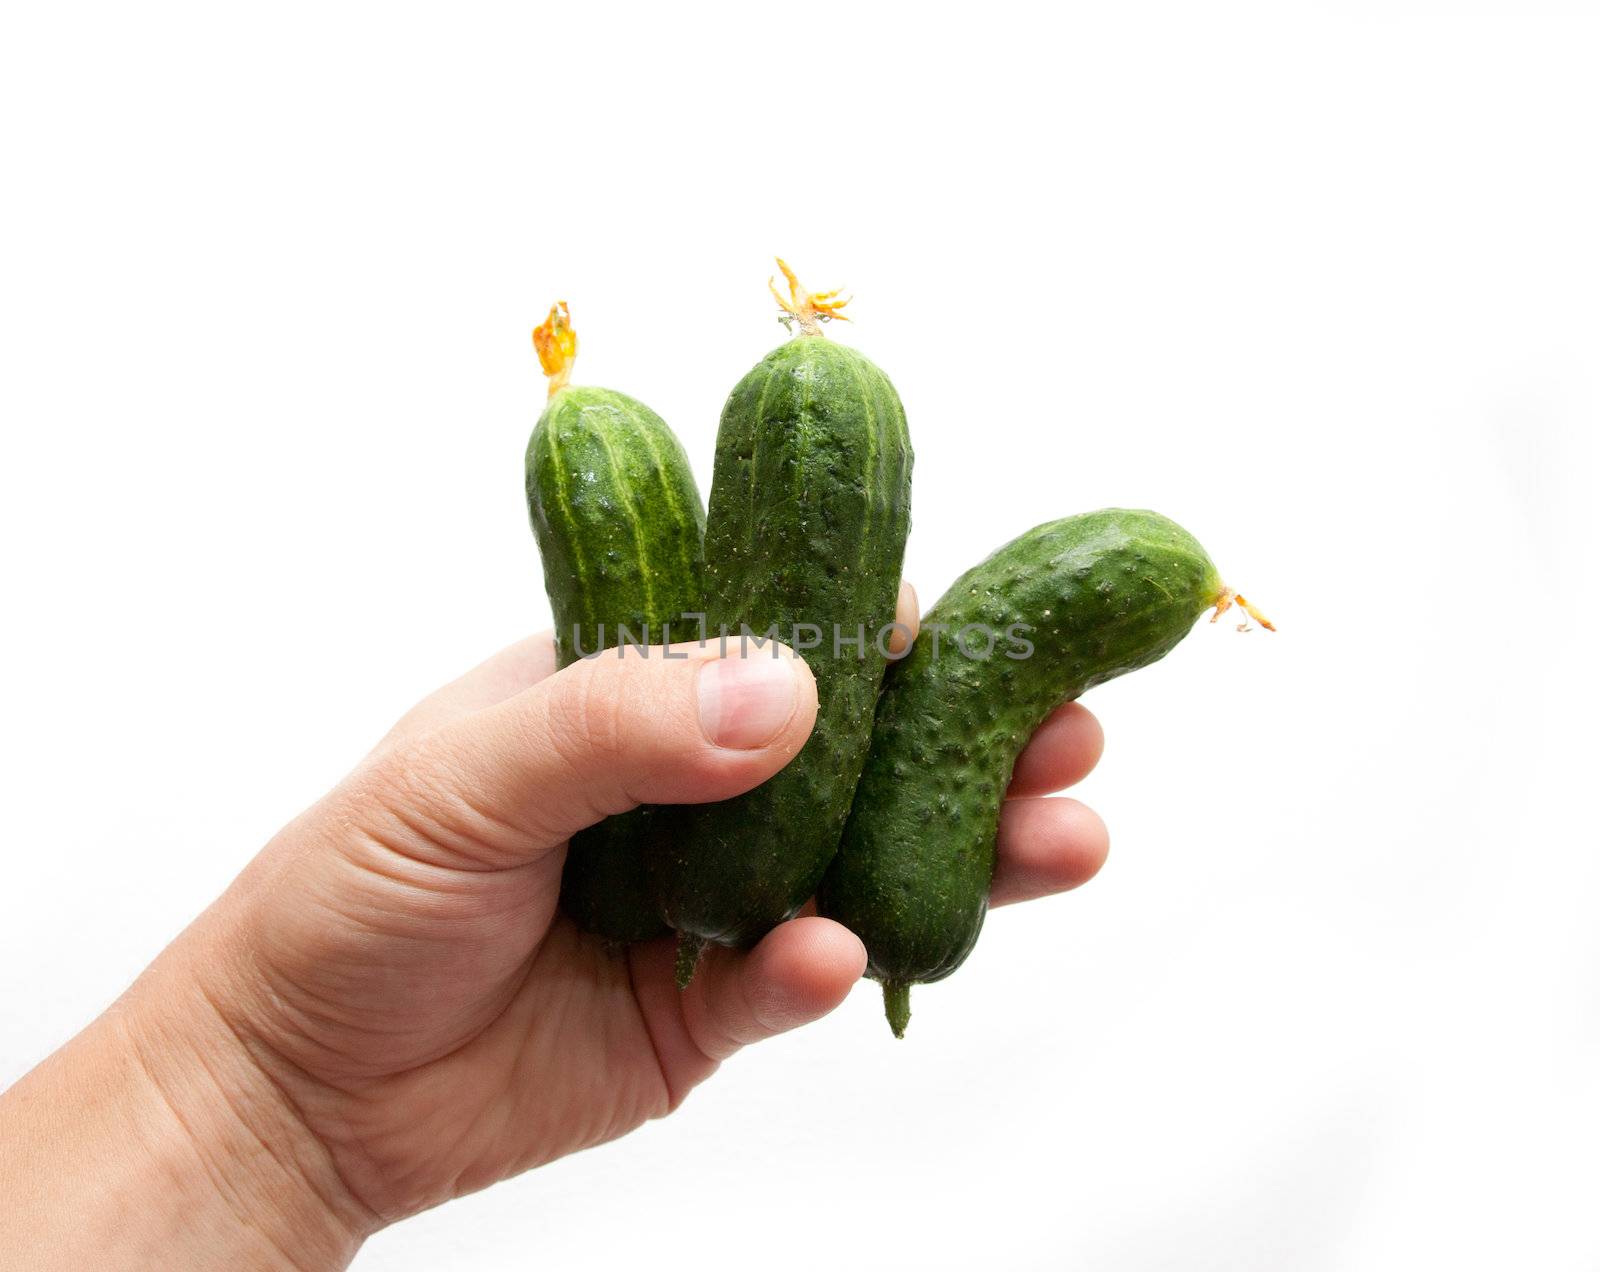 Cucumber in a hand on a white background by schankz